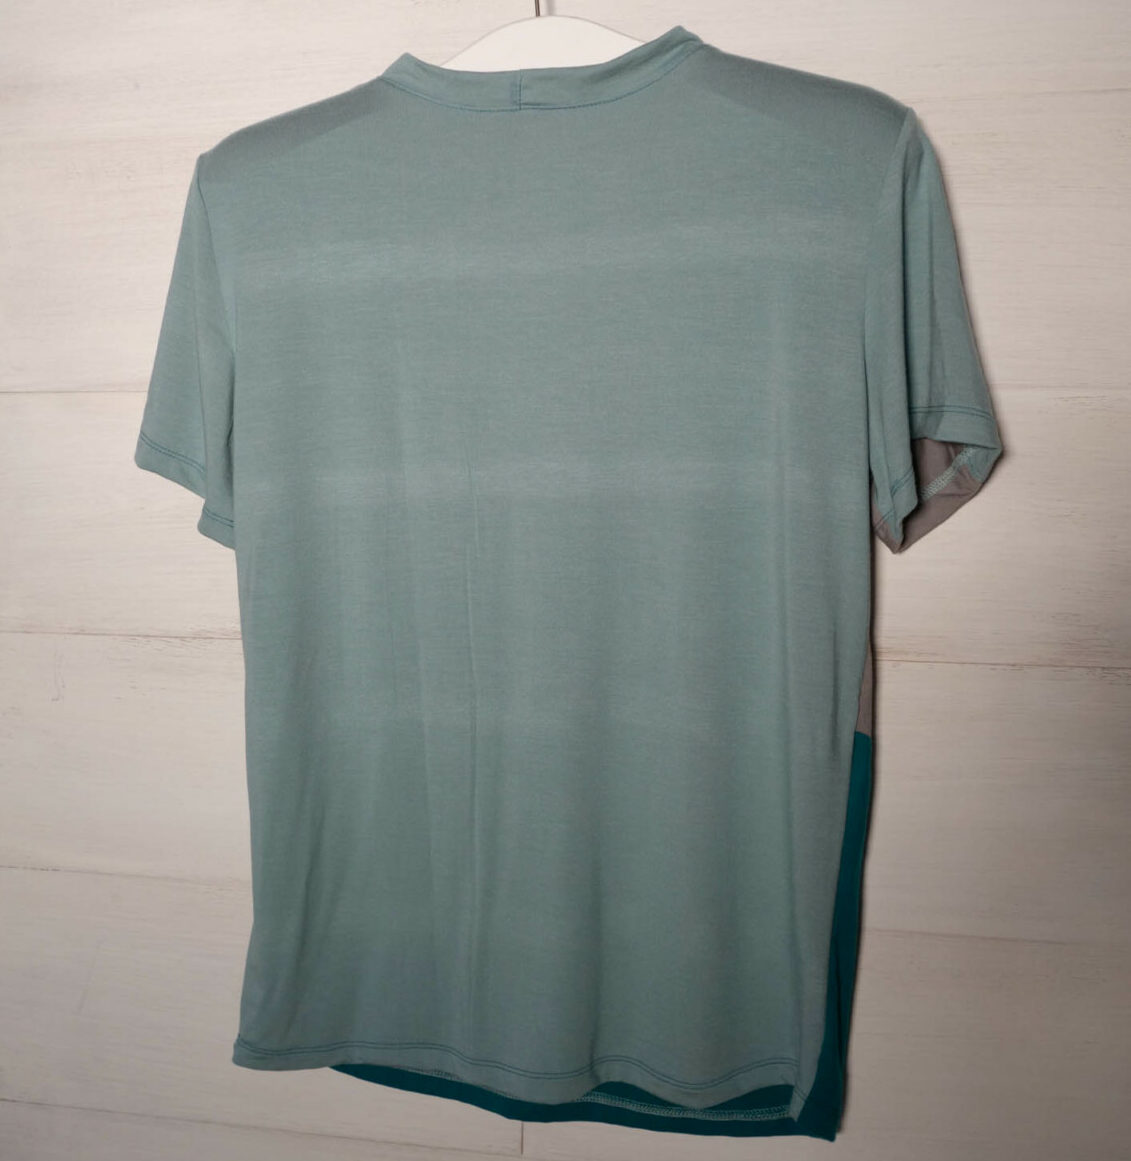 T-Shirt aus Tencel und Bambus-Jersey in petrol/ grau diagonal gestreift